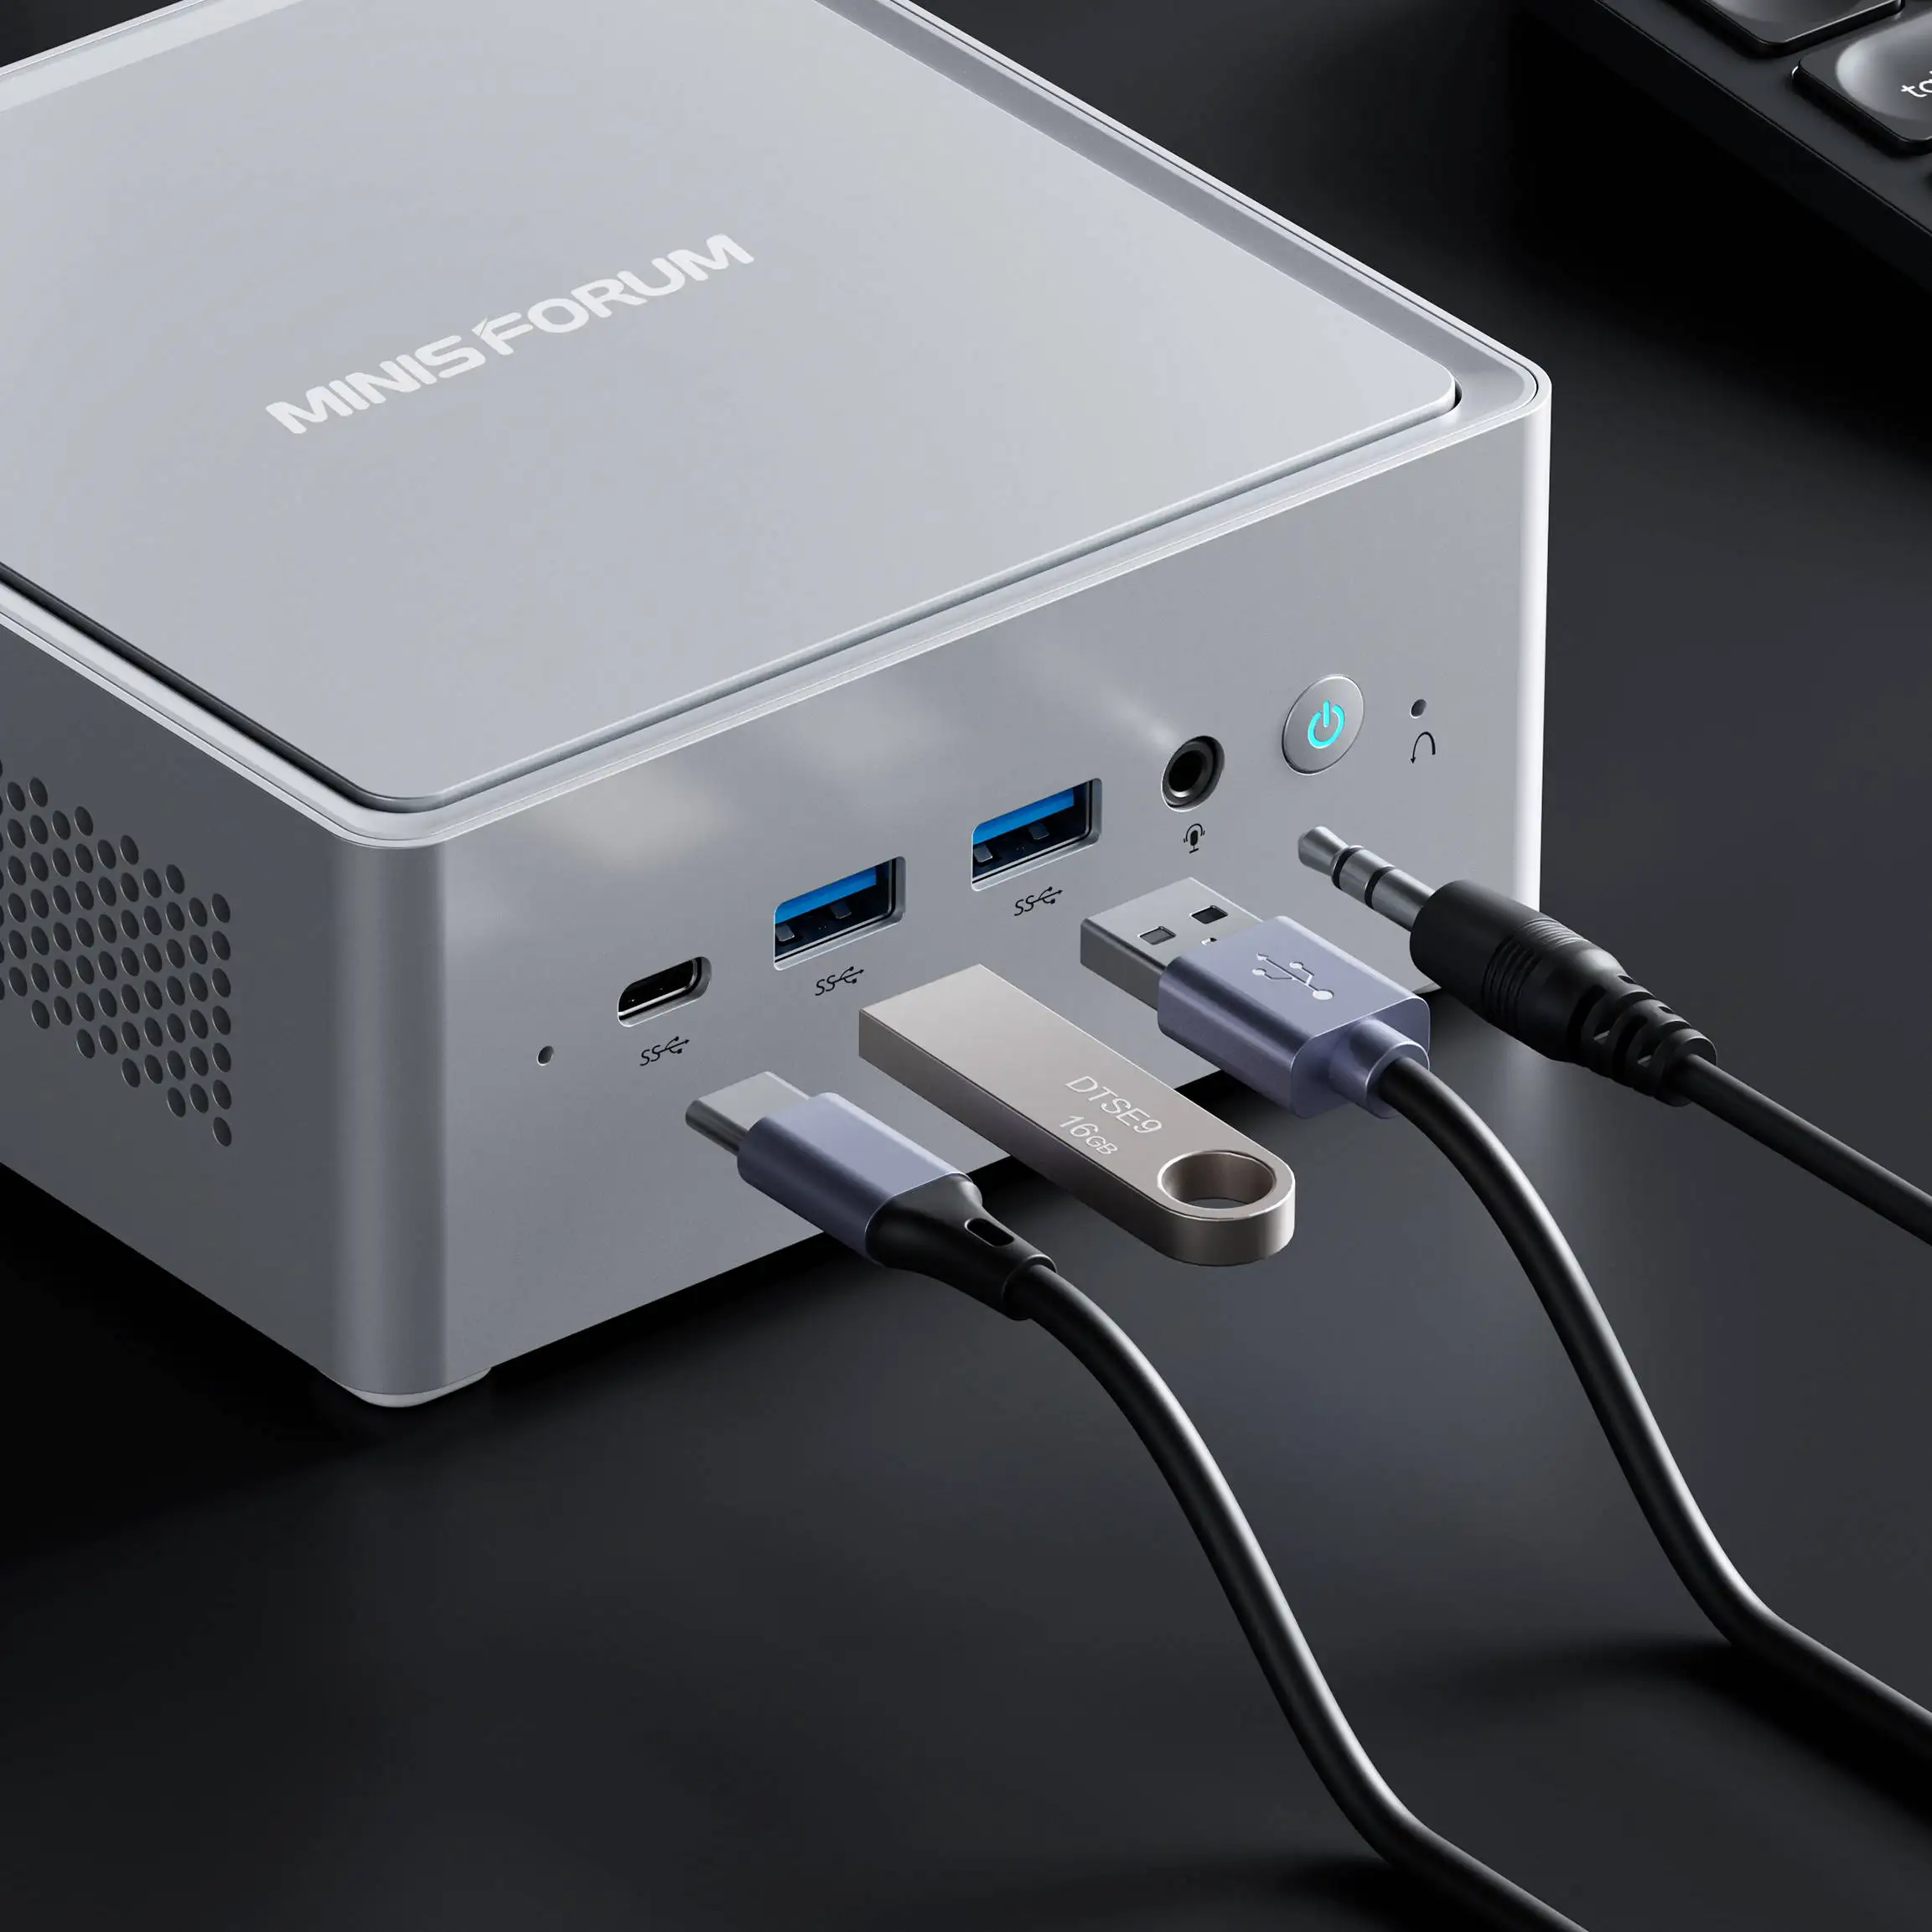 MinisForum Launches NAB6 mini-PC With Dual 2.5G Ethernet Ports